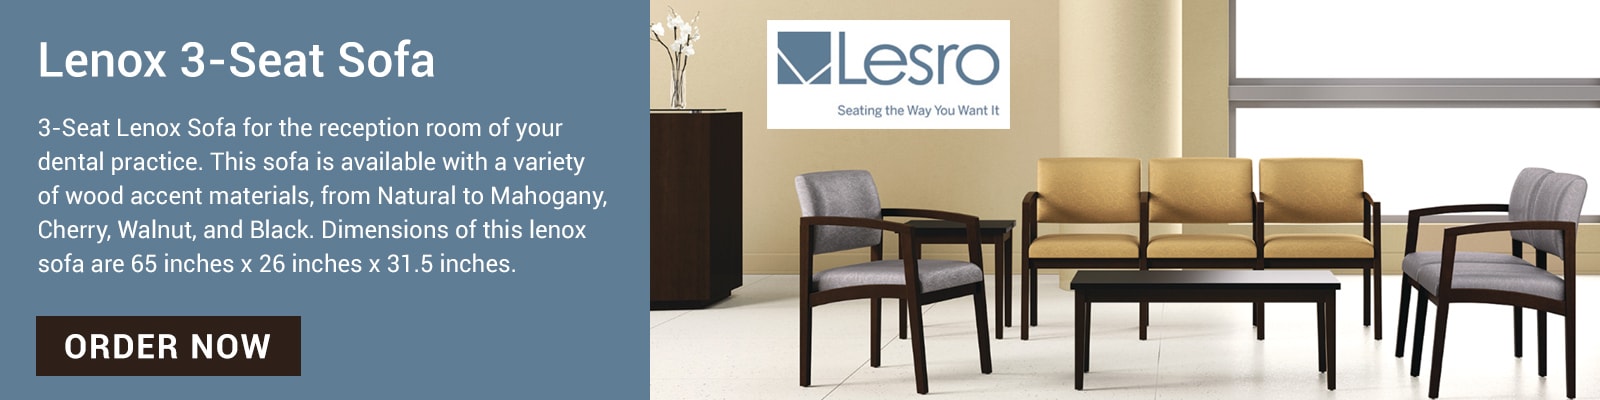 Lenox 3-Seat Sofa - Lesro